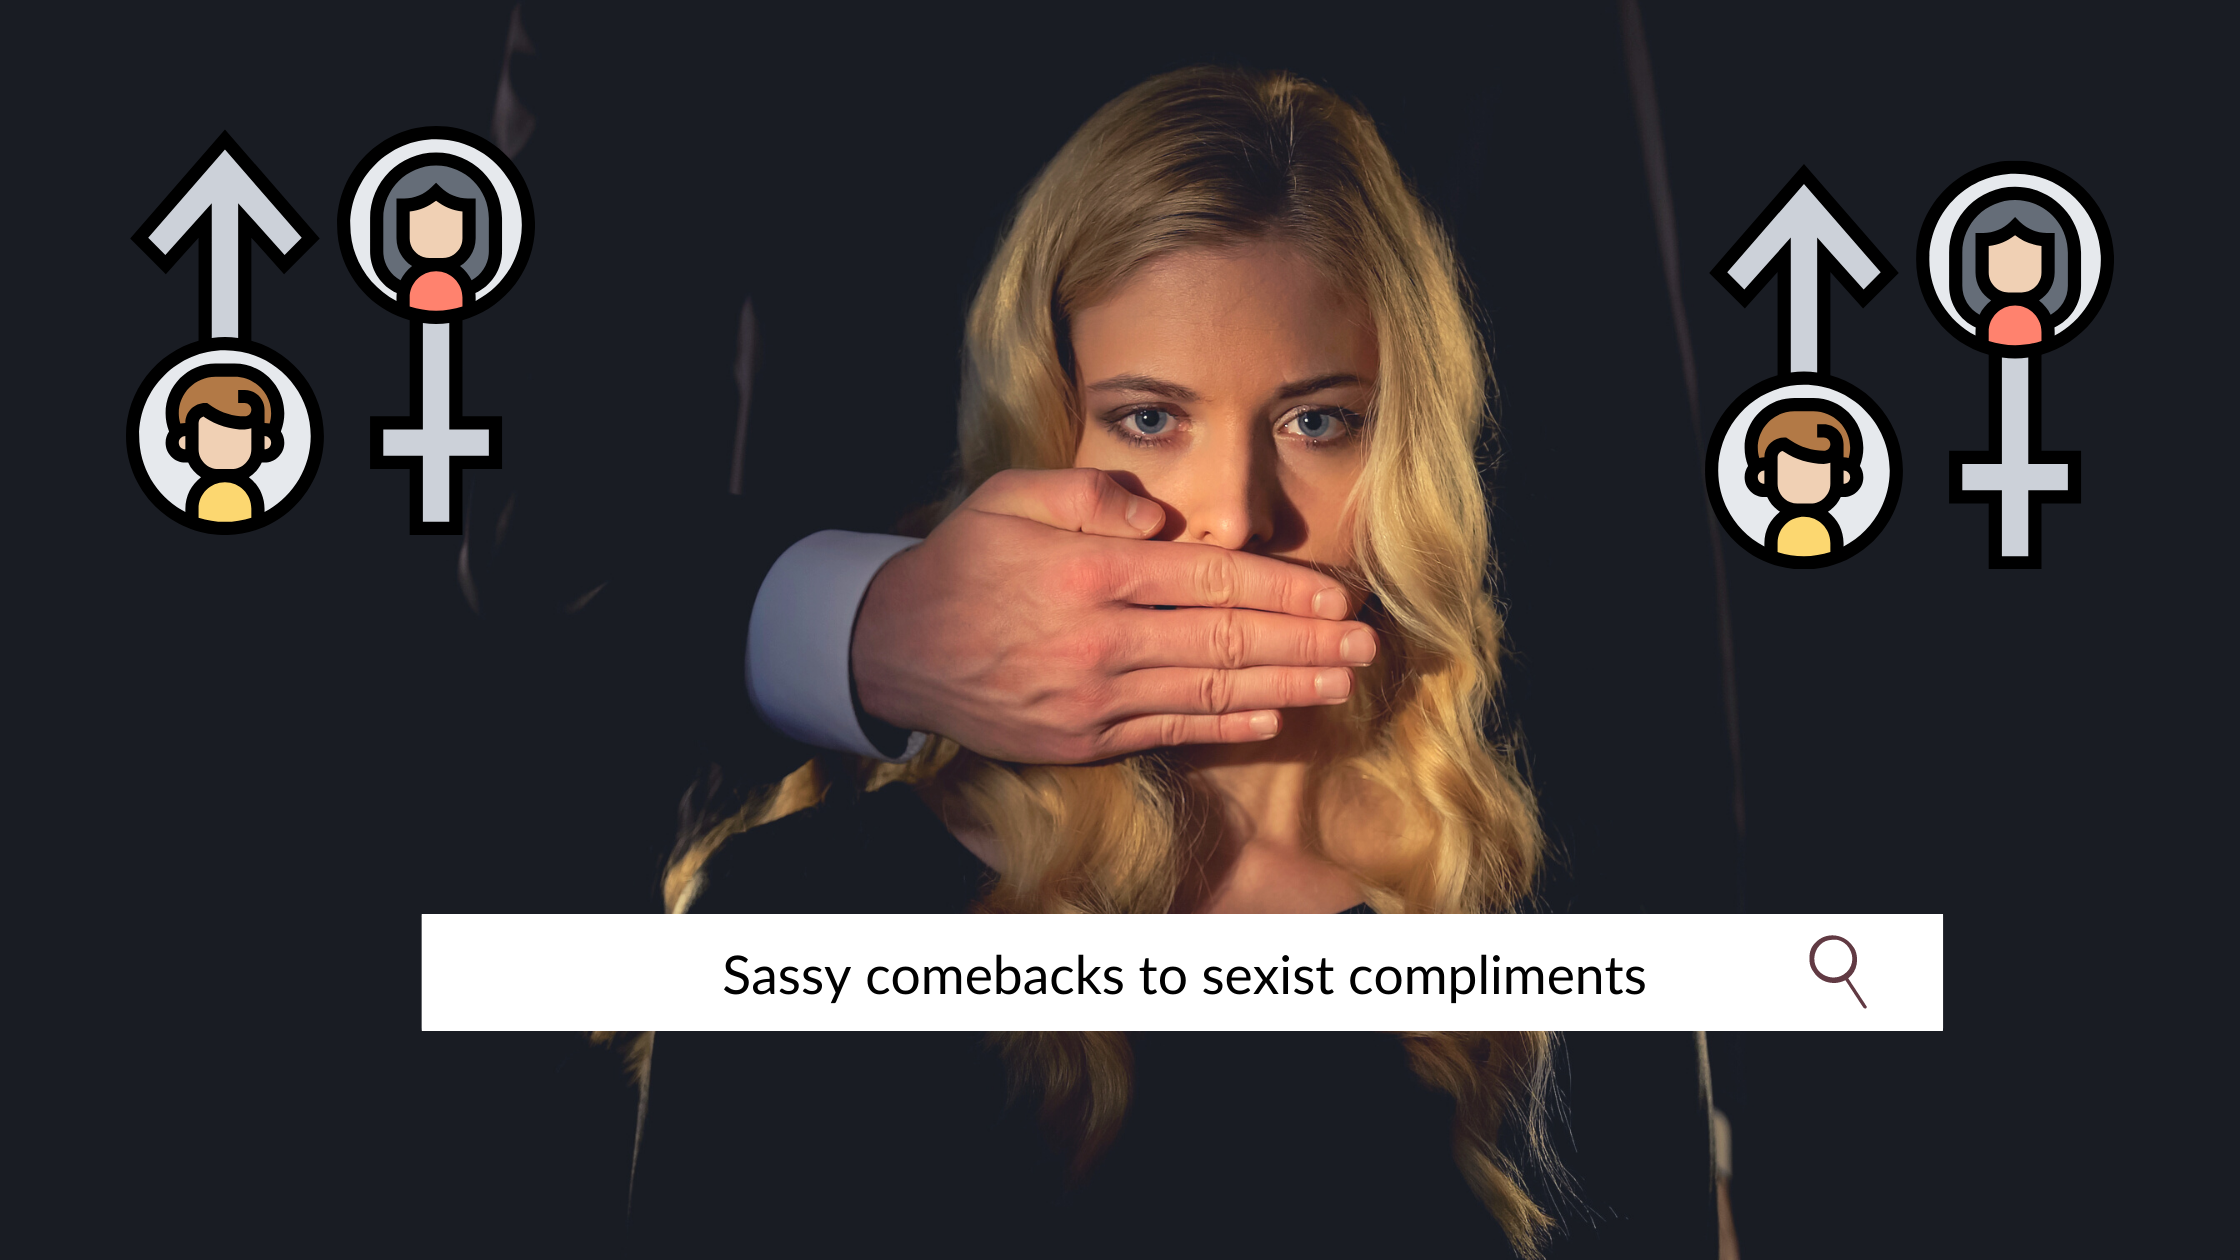 Sassy comebacks to sexist compliments